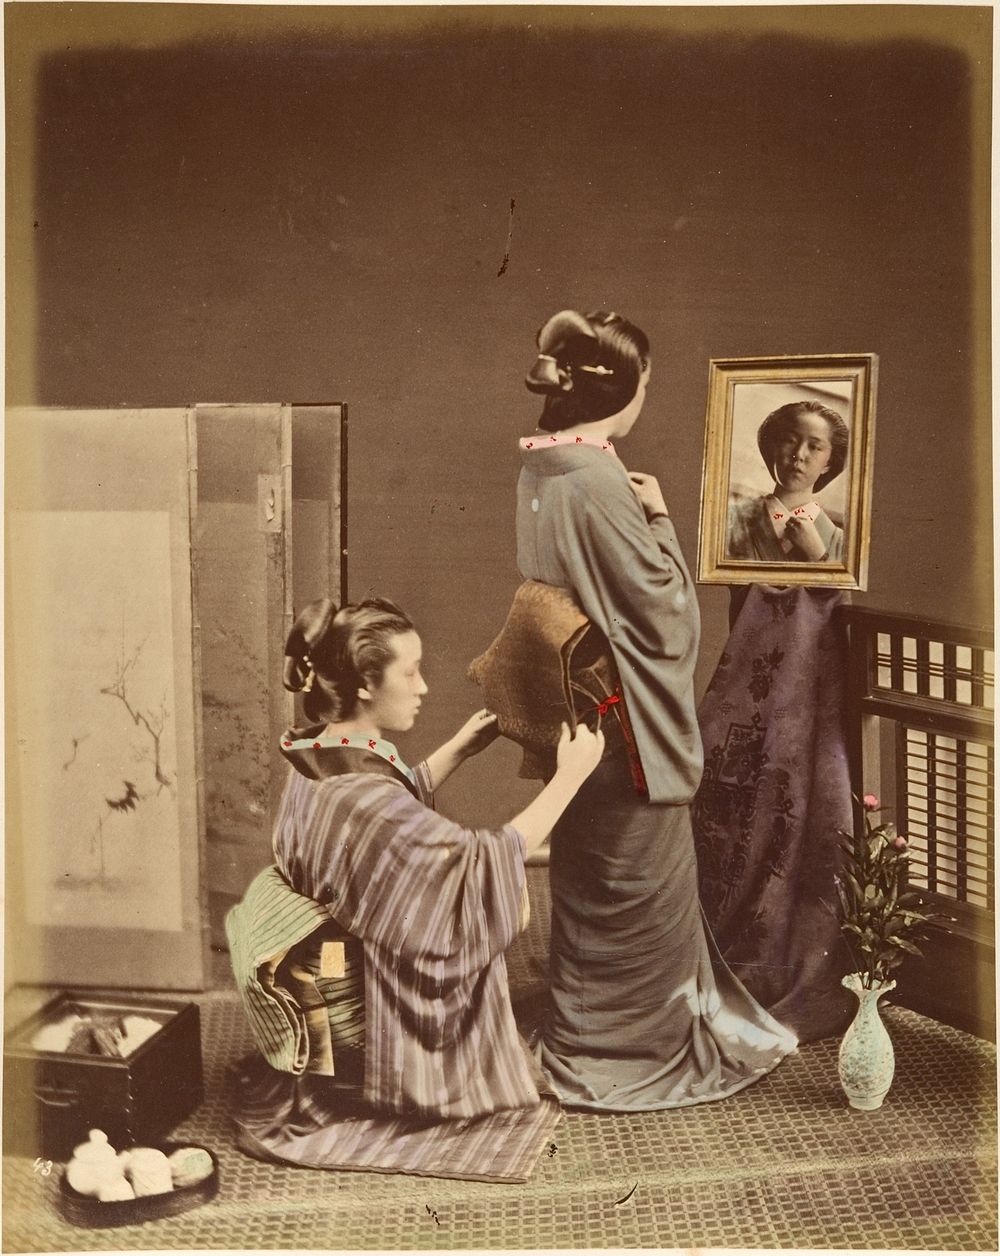 Two Japanese Women in Traditional Dress by Suzuki Shin'ichi